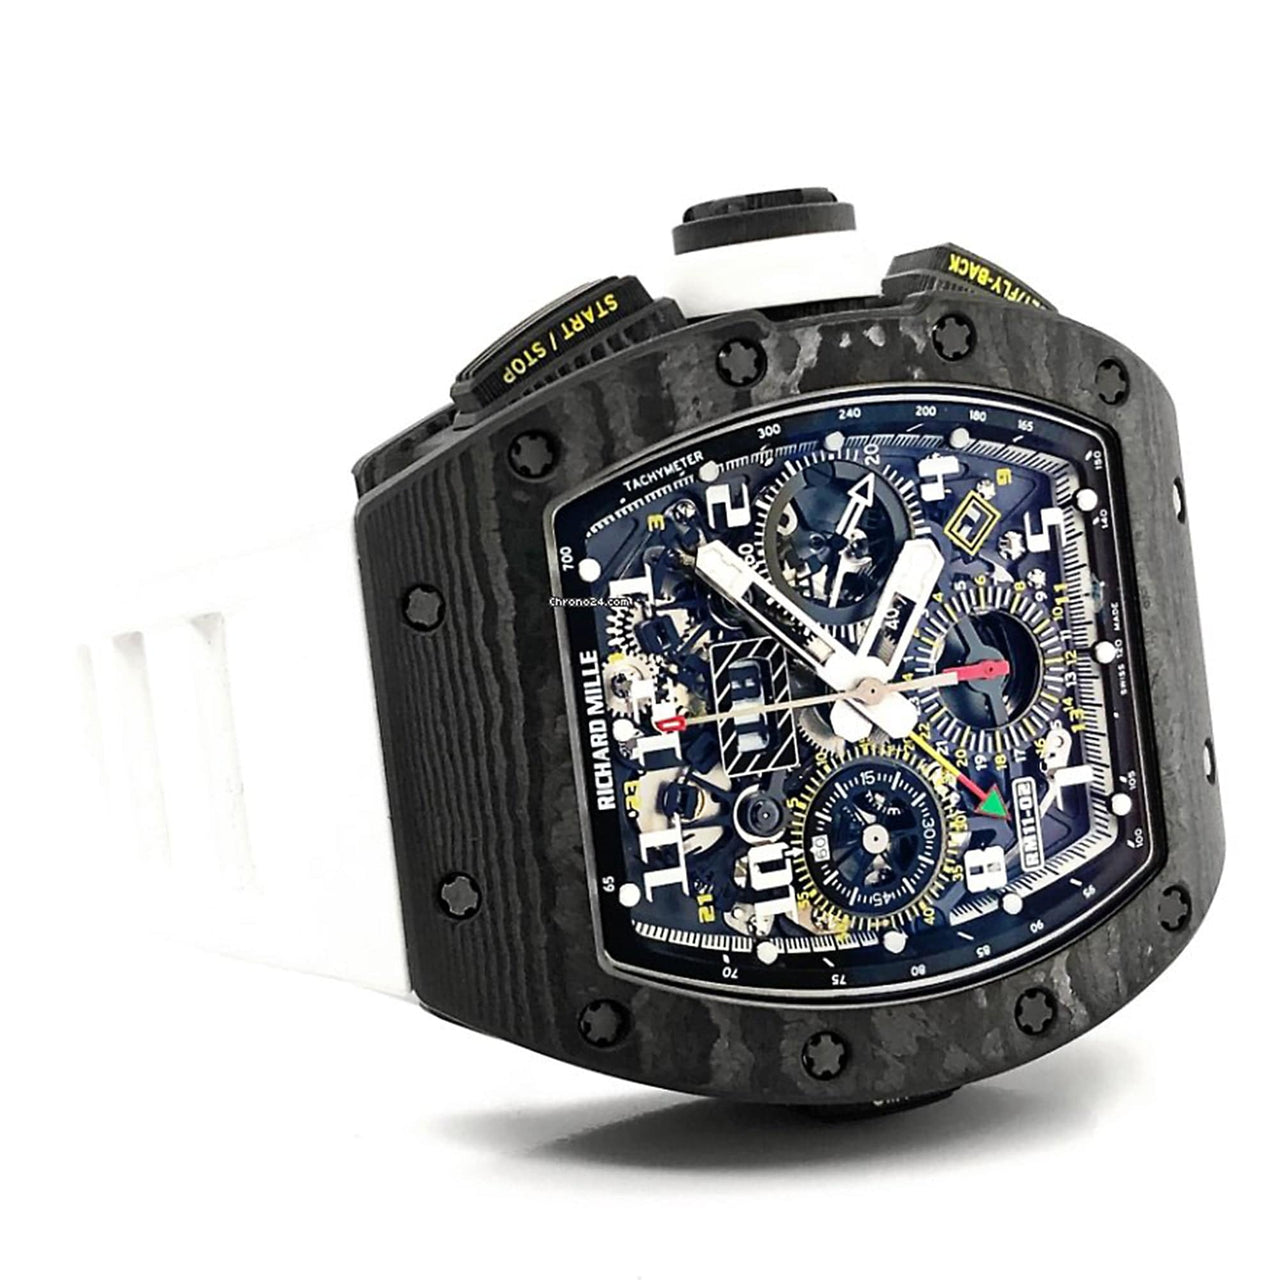 Luxury Watch Richard Mille GMT NTPT Carbon Shanghai Limited Edition to 30ps RM11-02 Wrist Aficionado